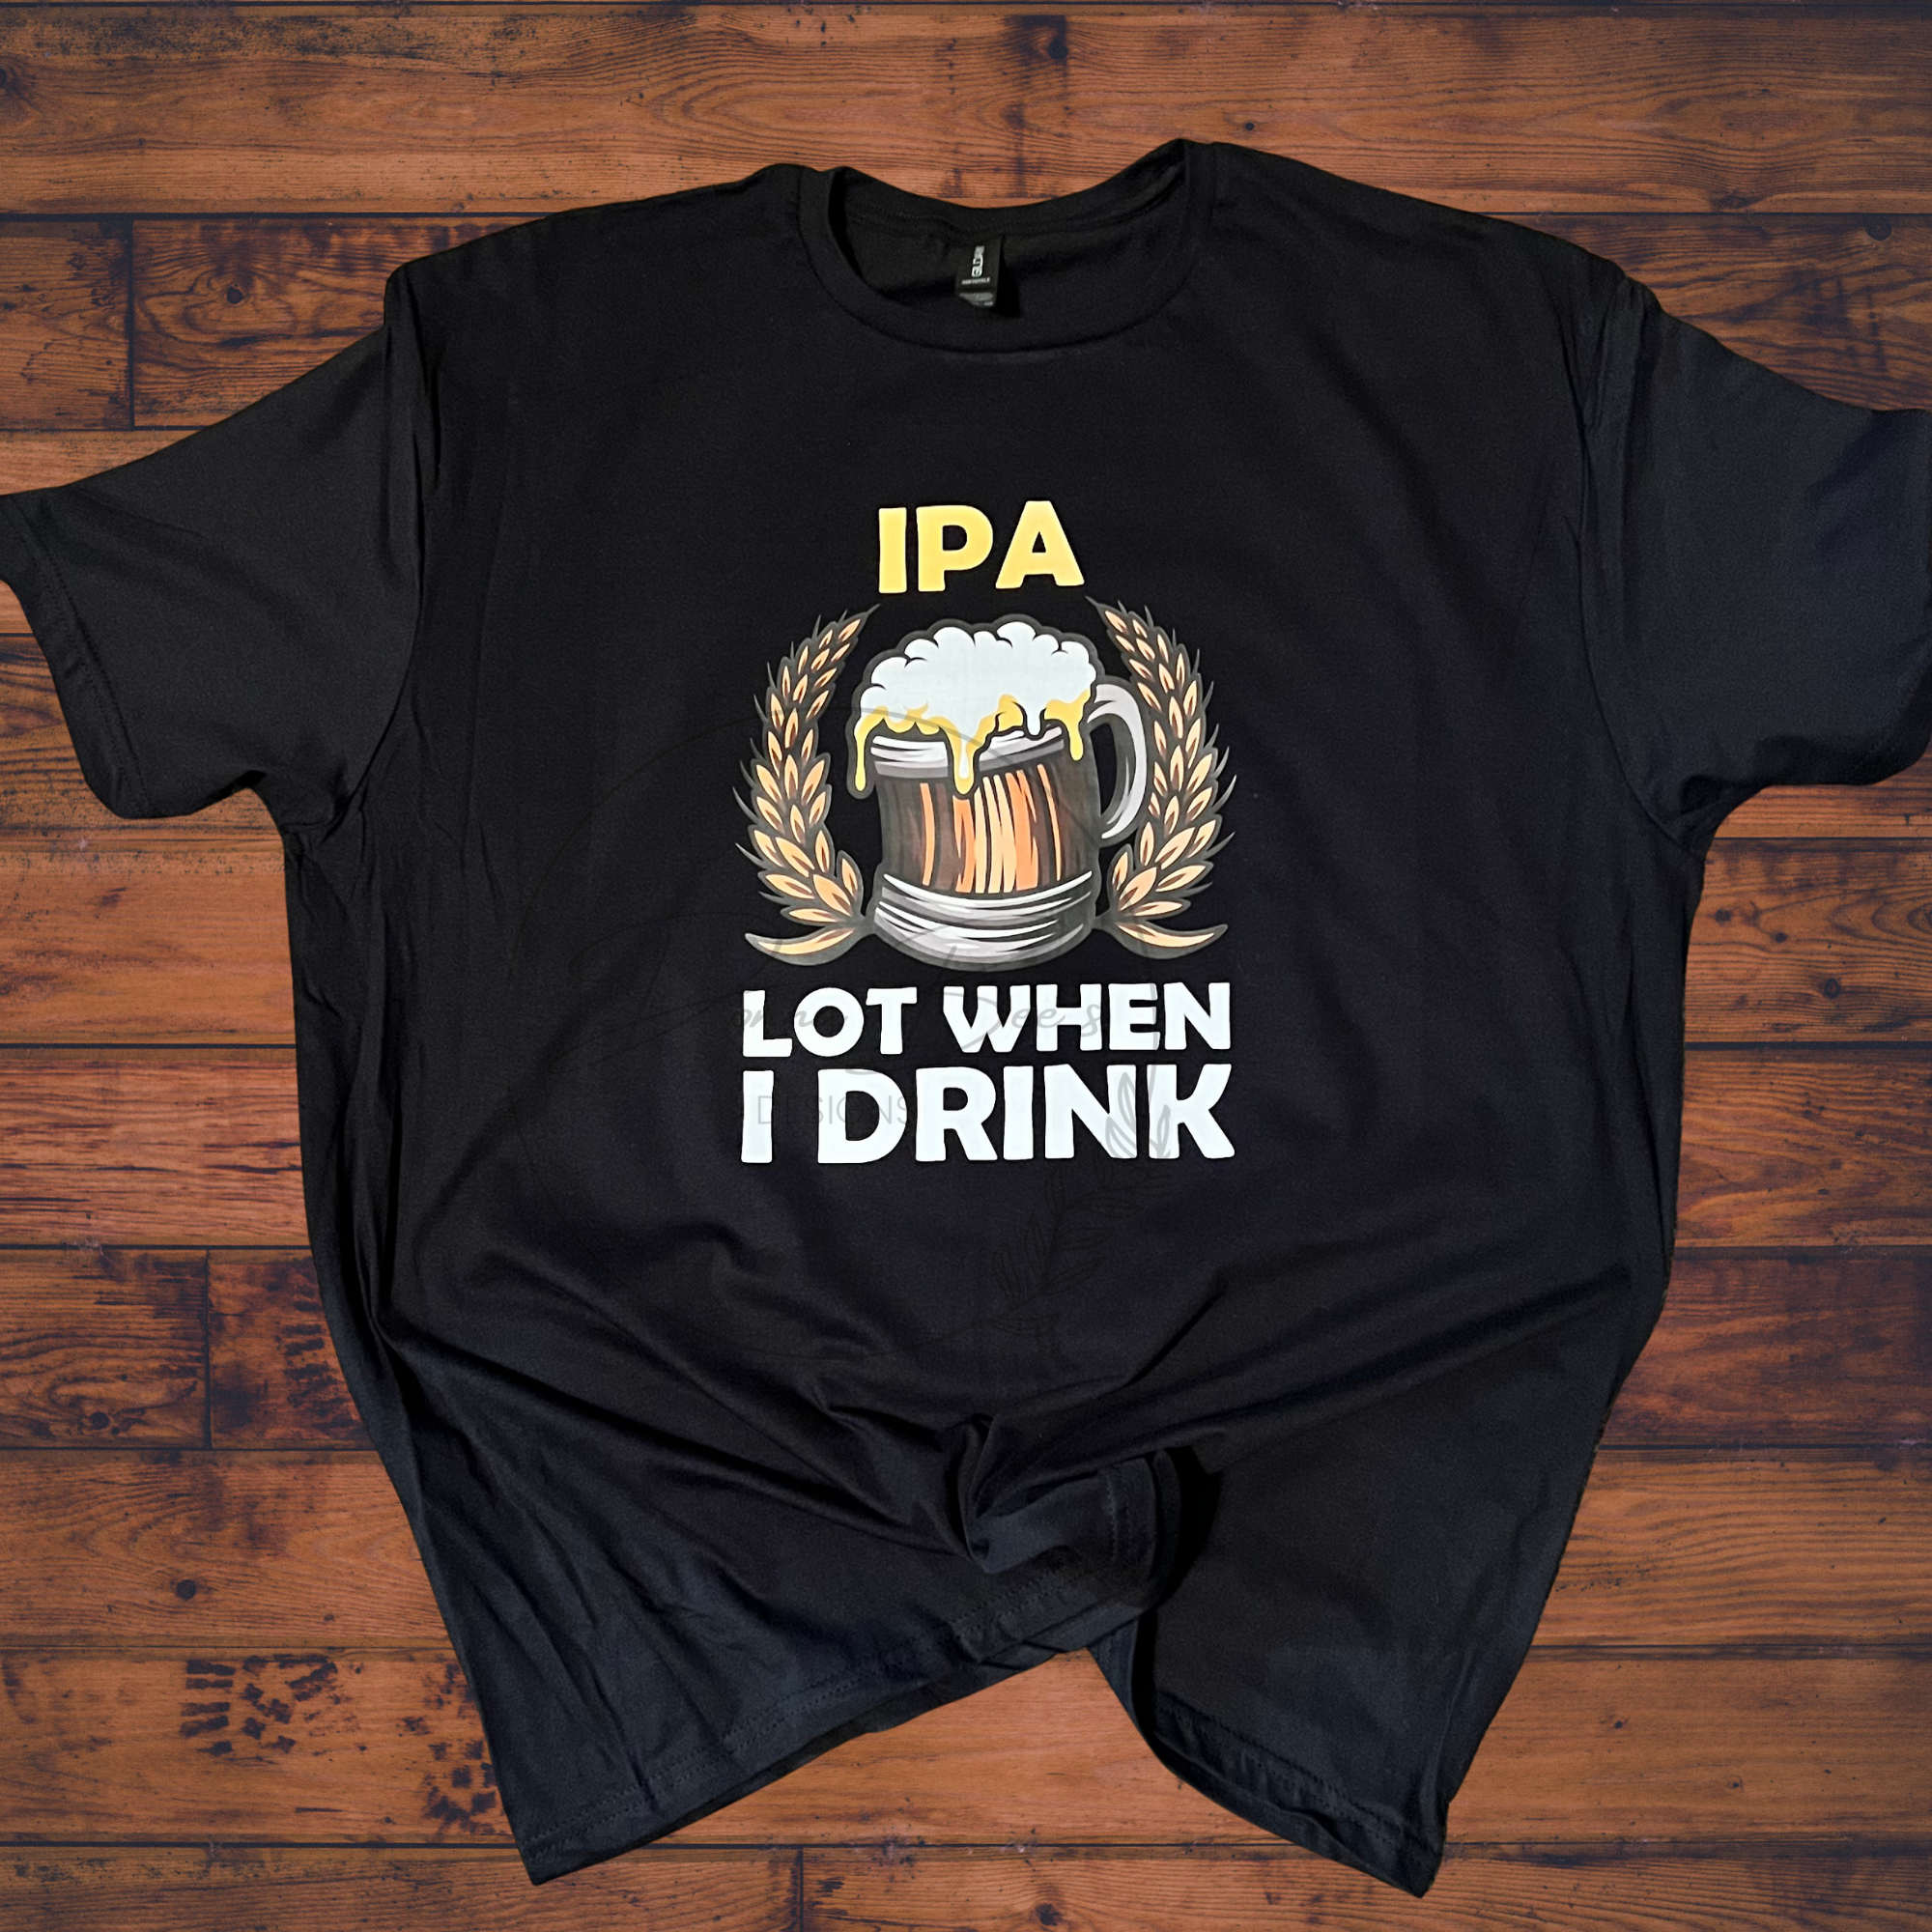 IPA LOT WHEN I DRINK | Bar Hopping tee | Beer T-shirt